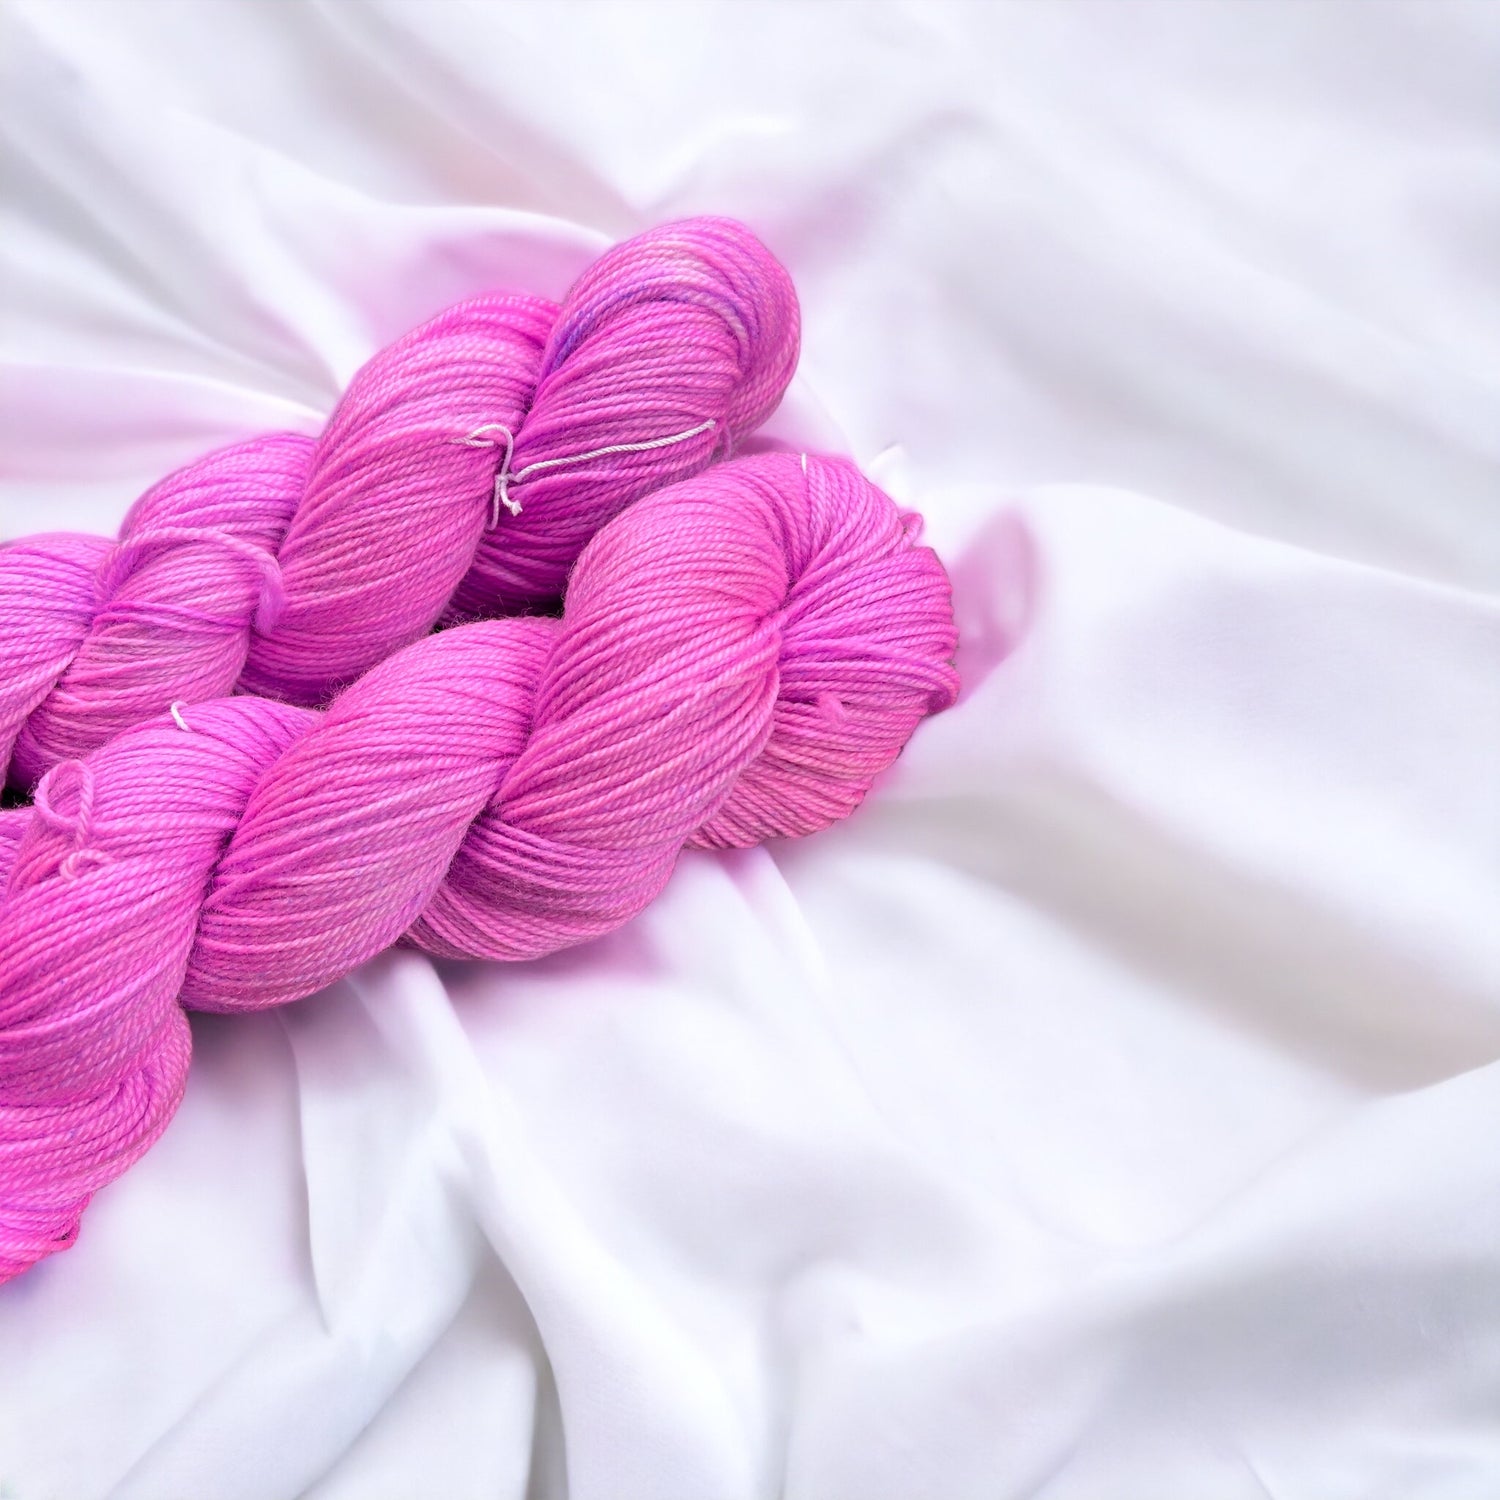 Misfit-80/20 superwash merino/nylon sock yarn - SkeinAppeal